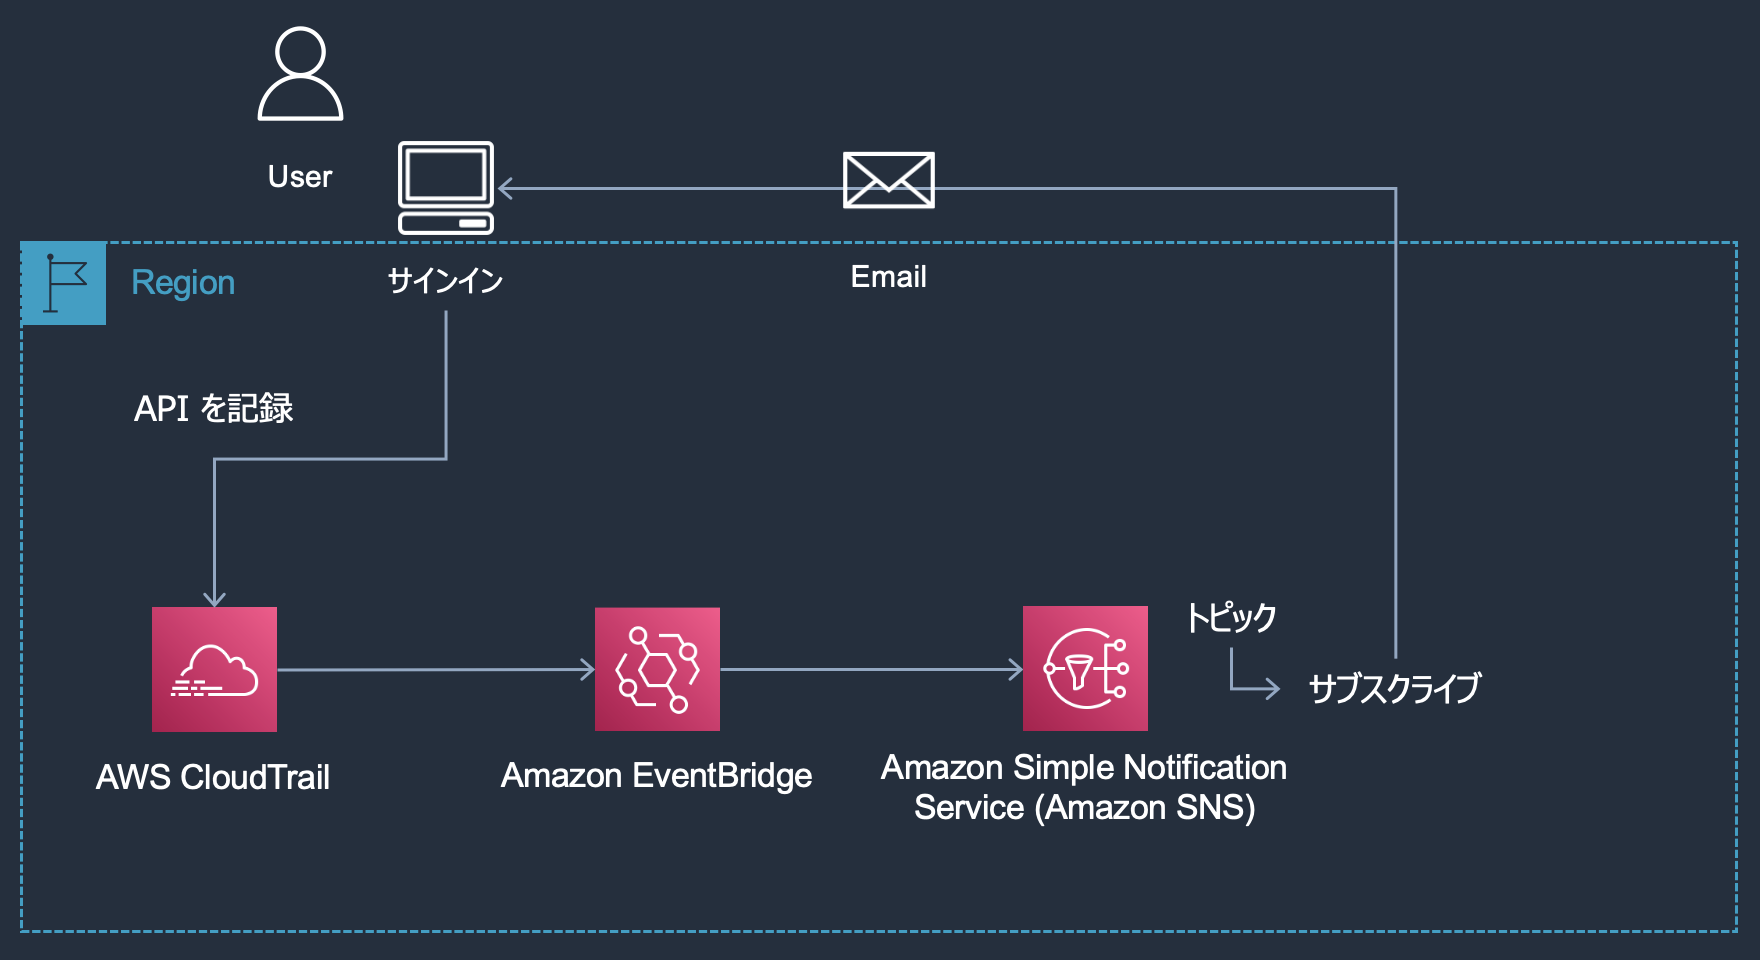 Amazon Simple Notification Service (Amazon SNS)